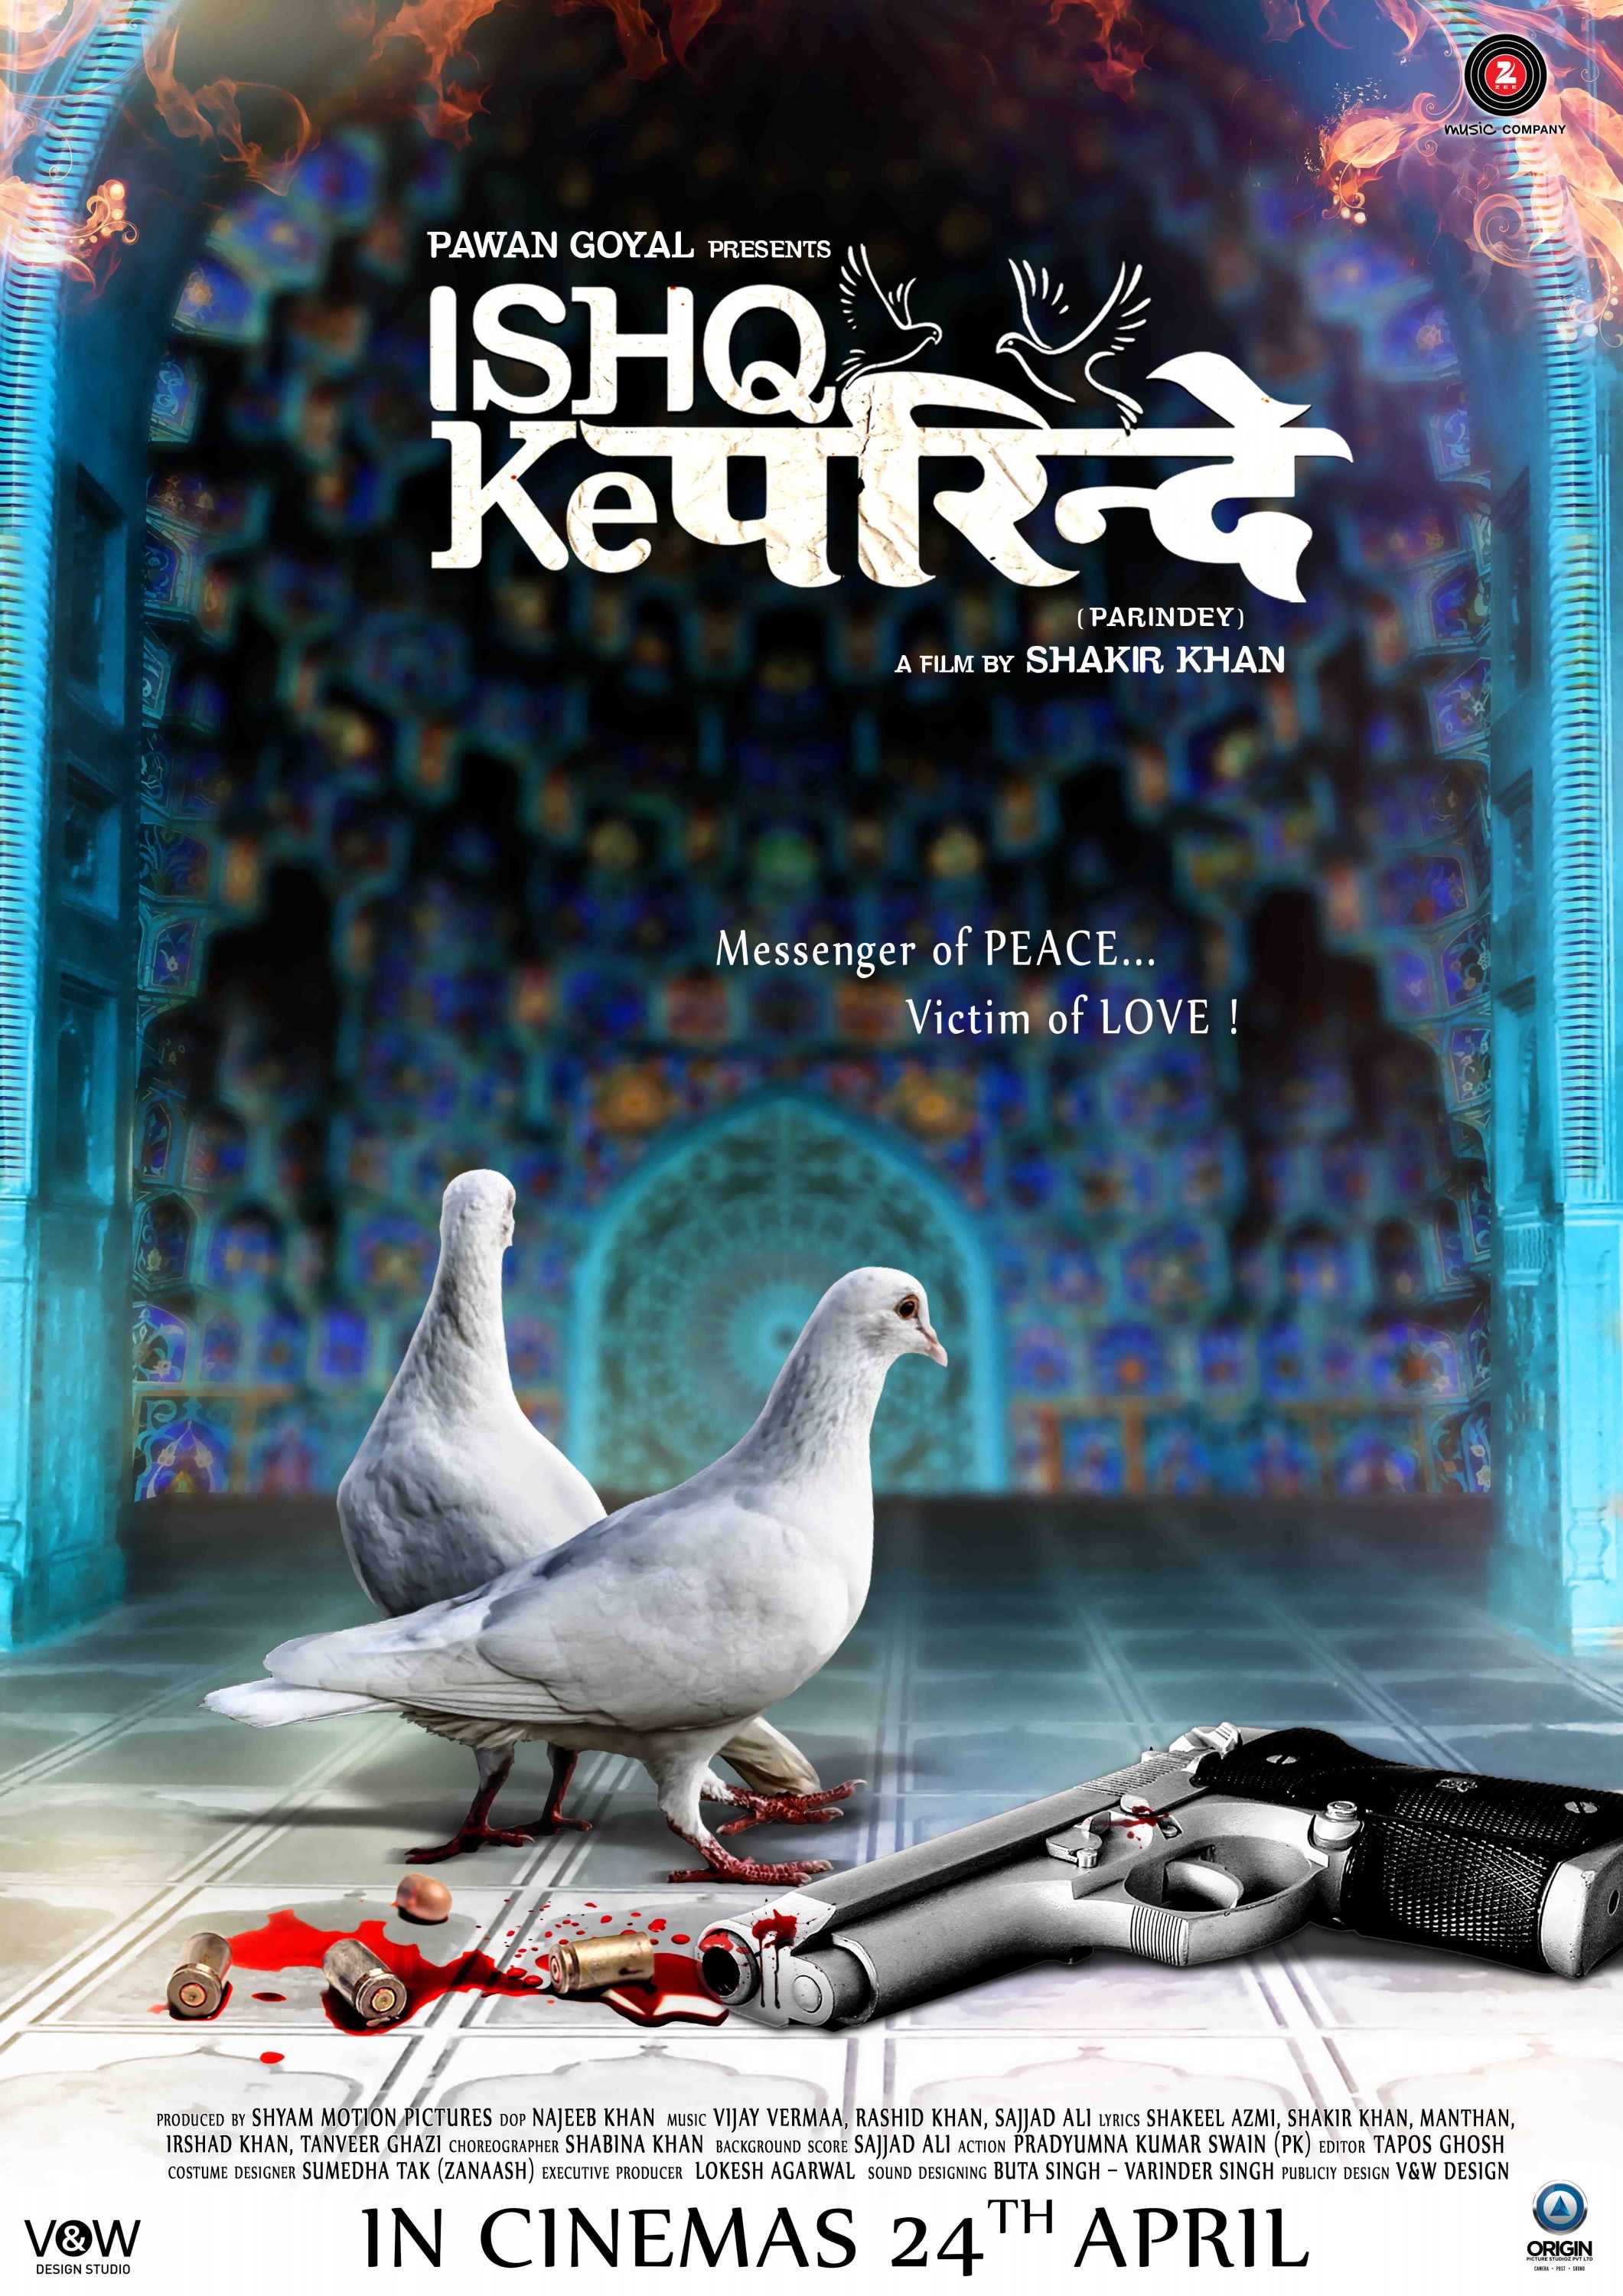 Mega Sized Movie Poster Image for Ishq Ke Parindey (#4 of 4)